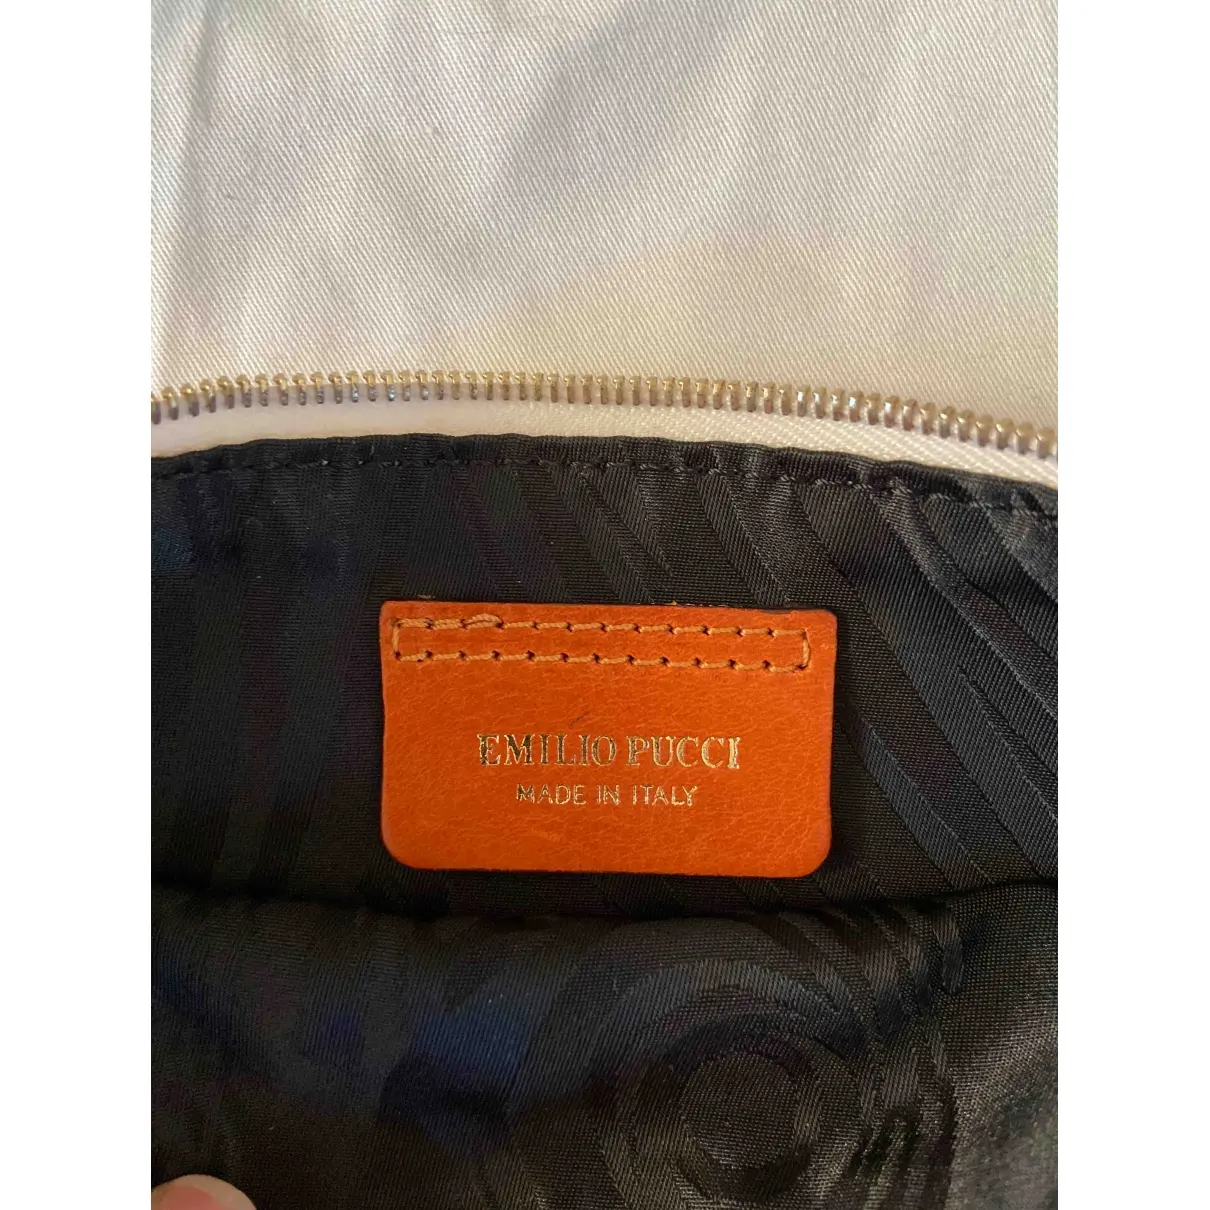 Buy Emilio Pucci Silk clutch bag online - Vintage